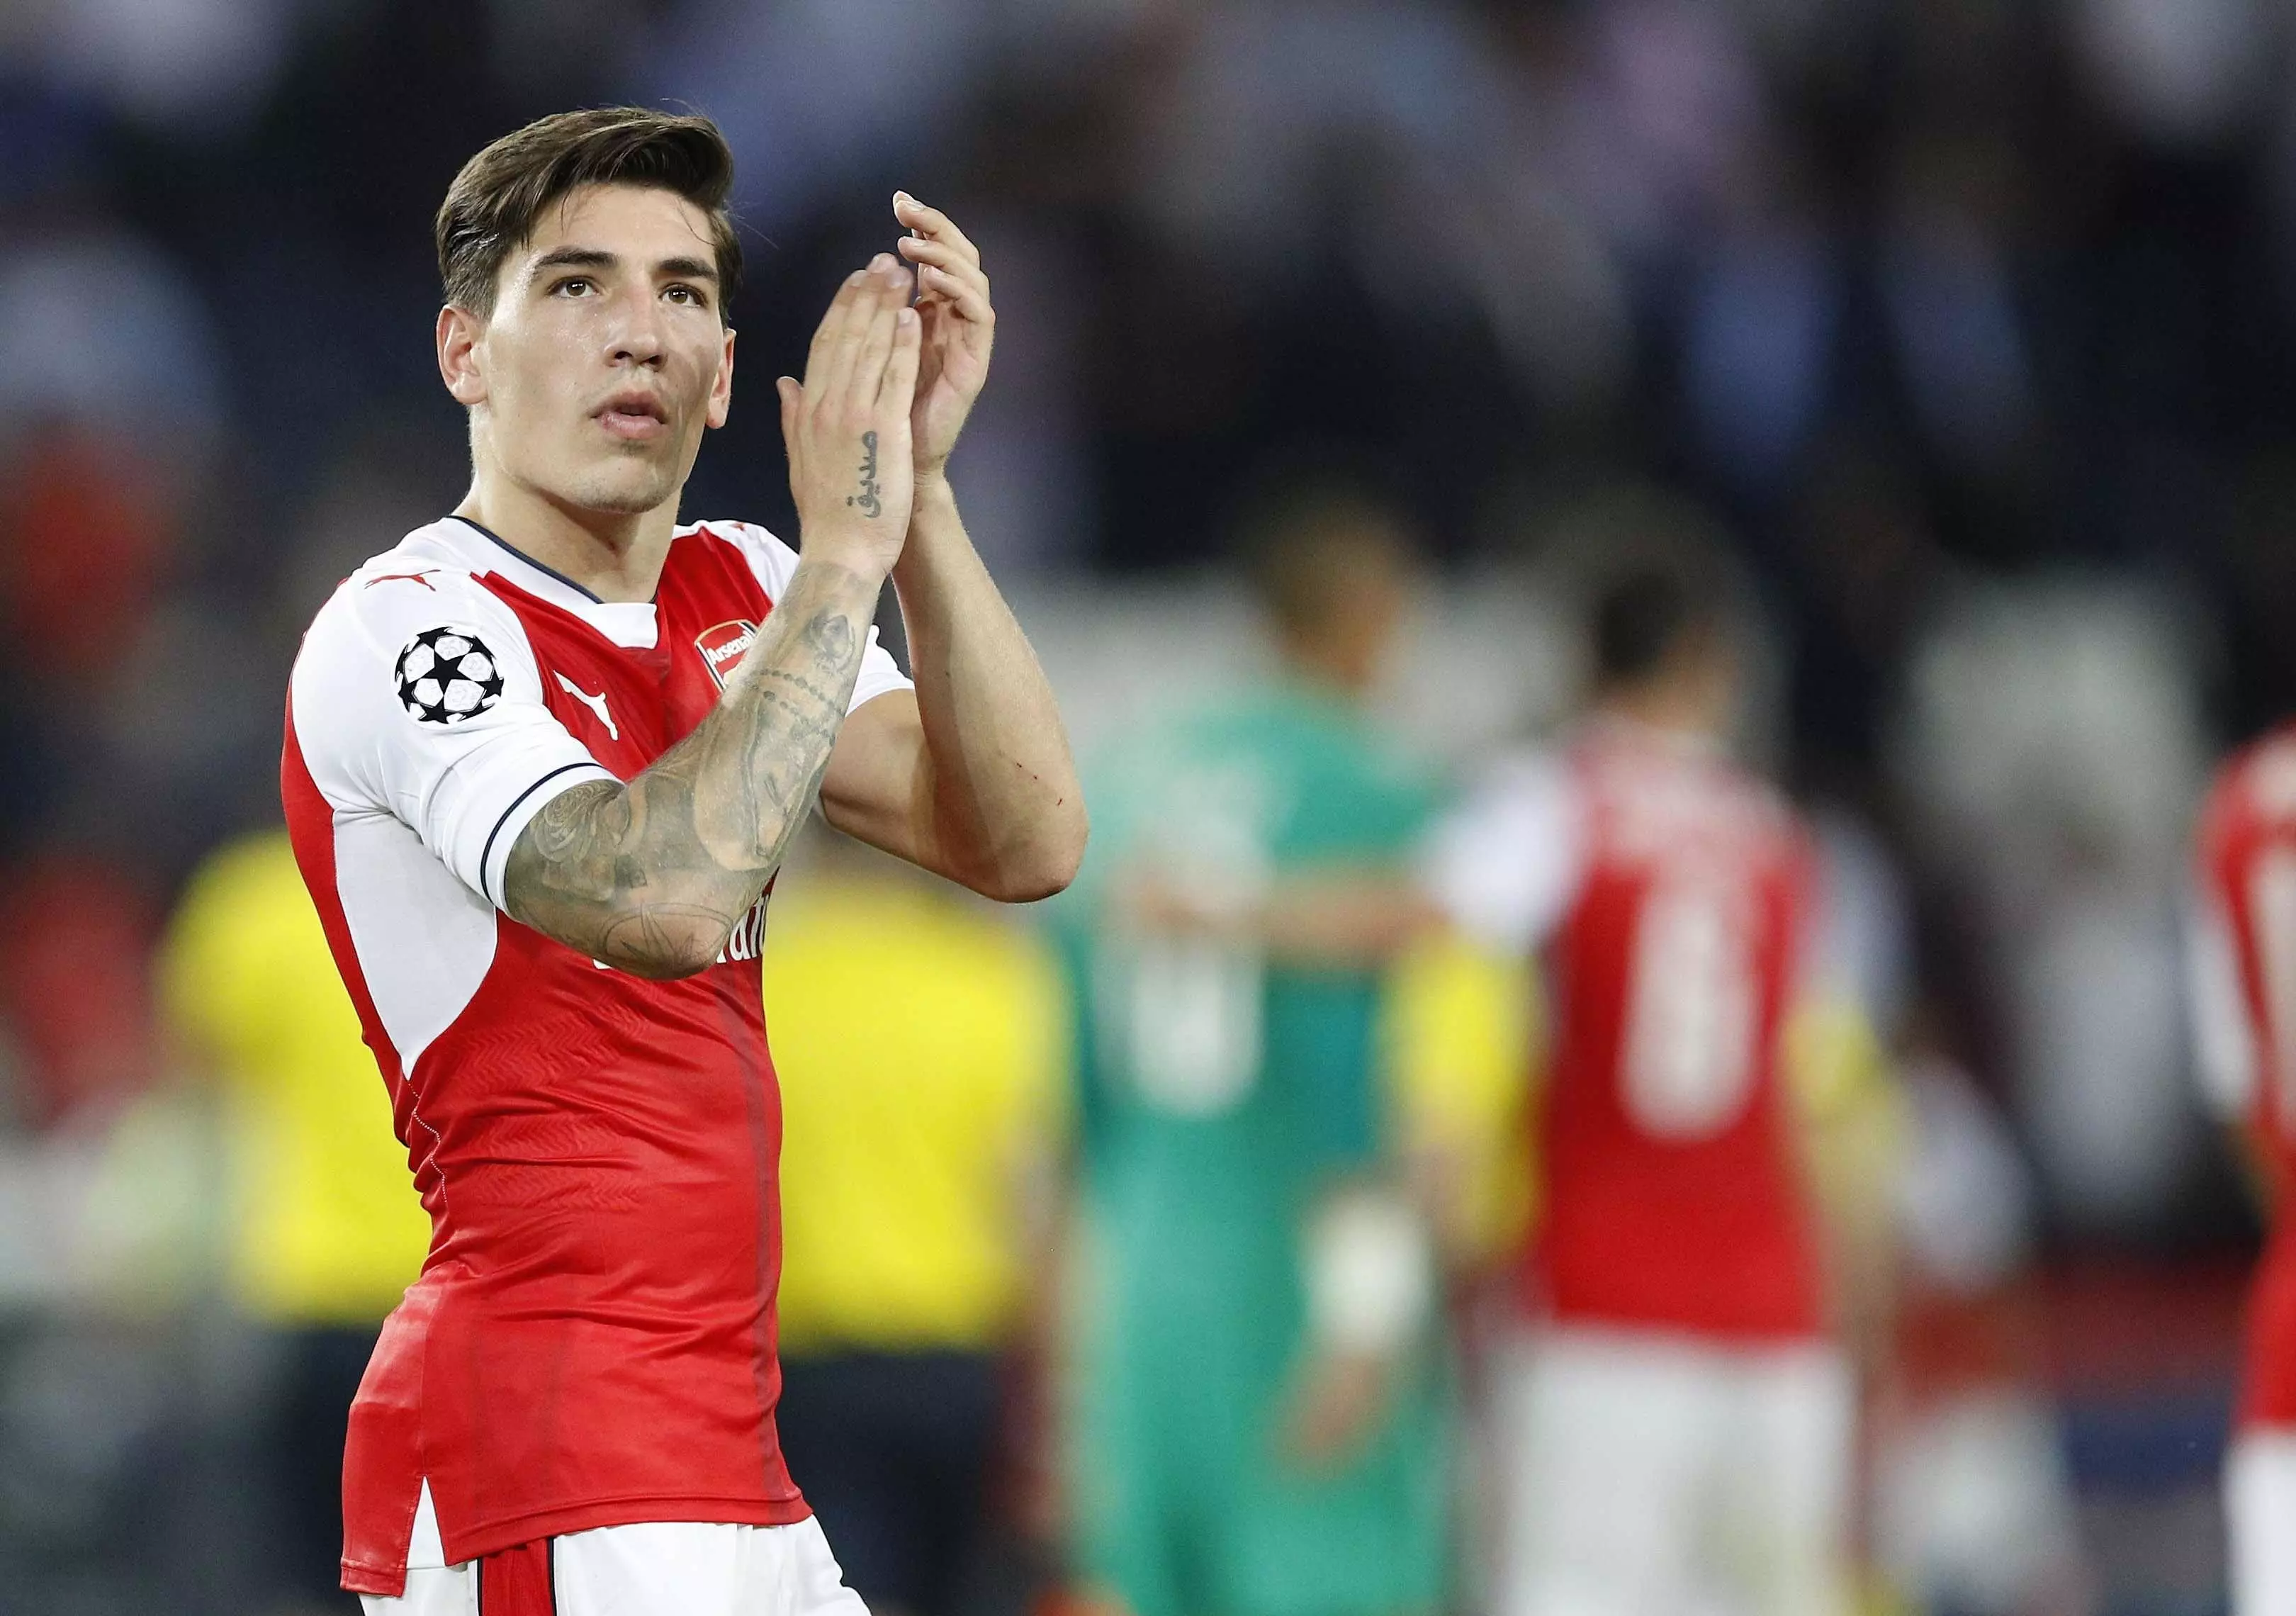 Arsenal's Injury Curse Strikes Hector Bellerin